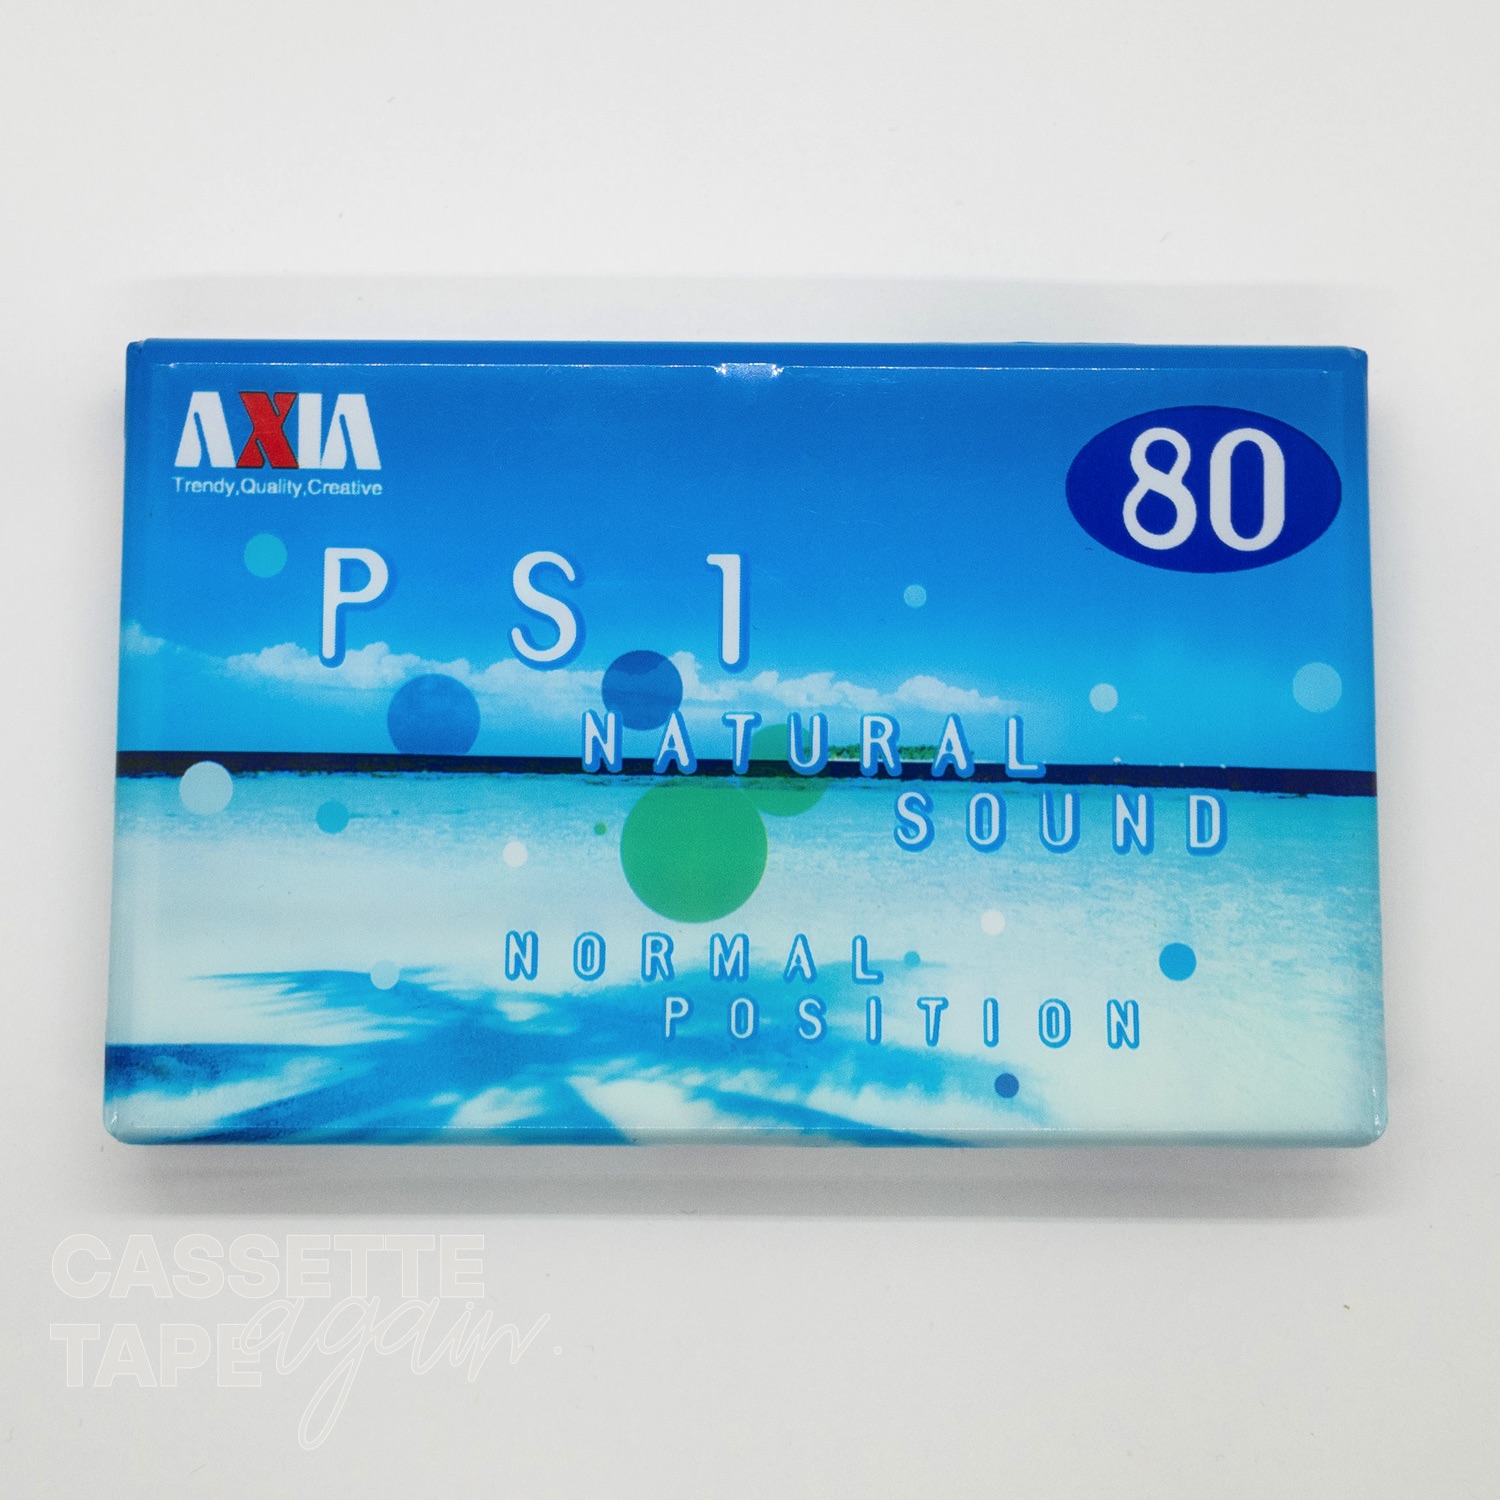 PS1 80 / AXIA/FUJI(ノーマル)